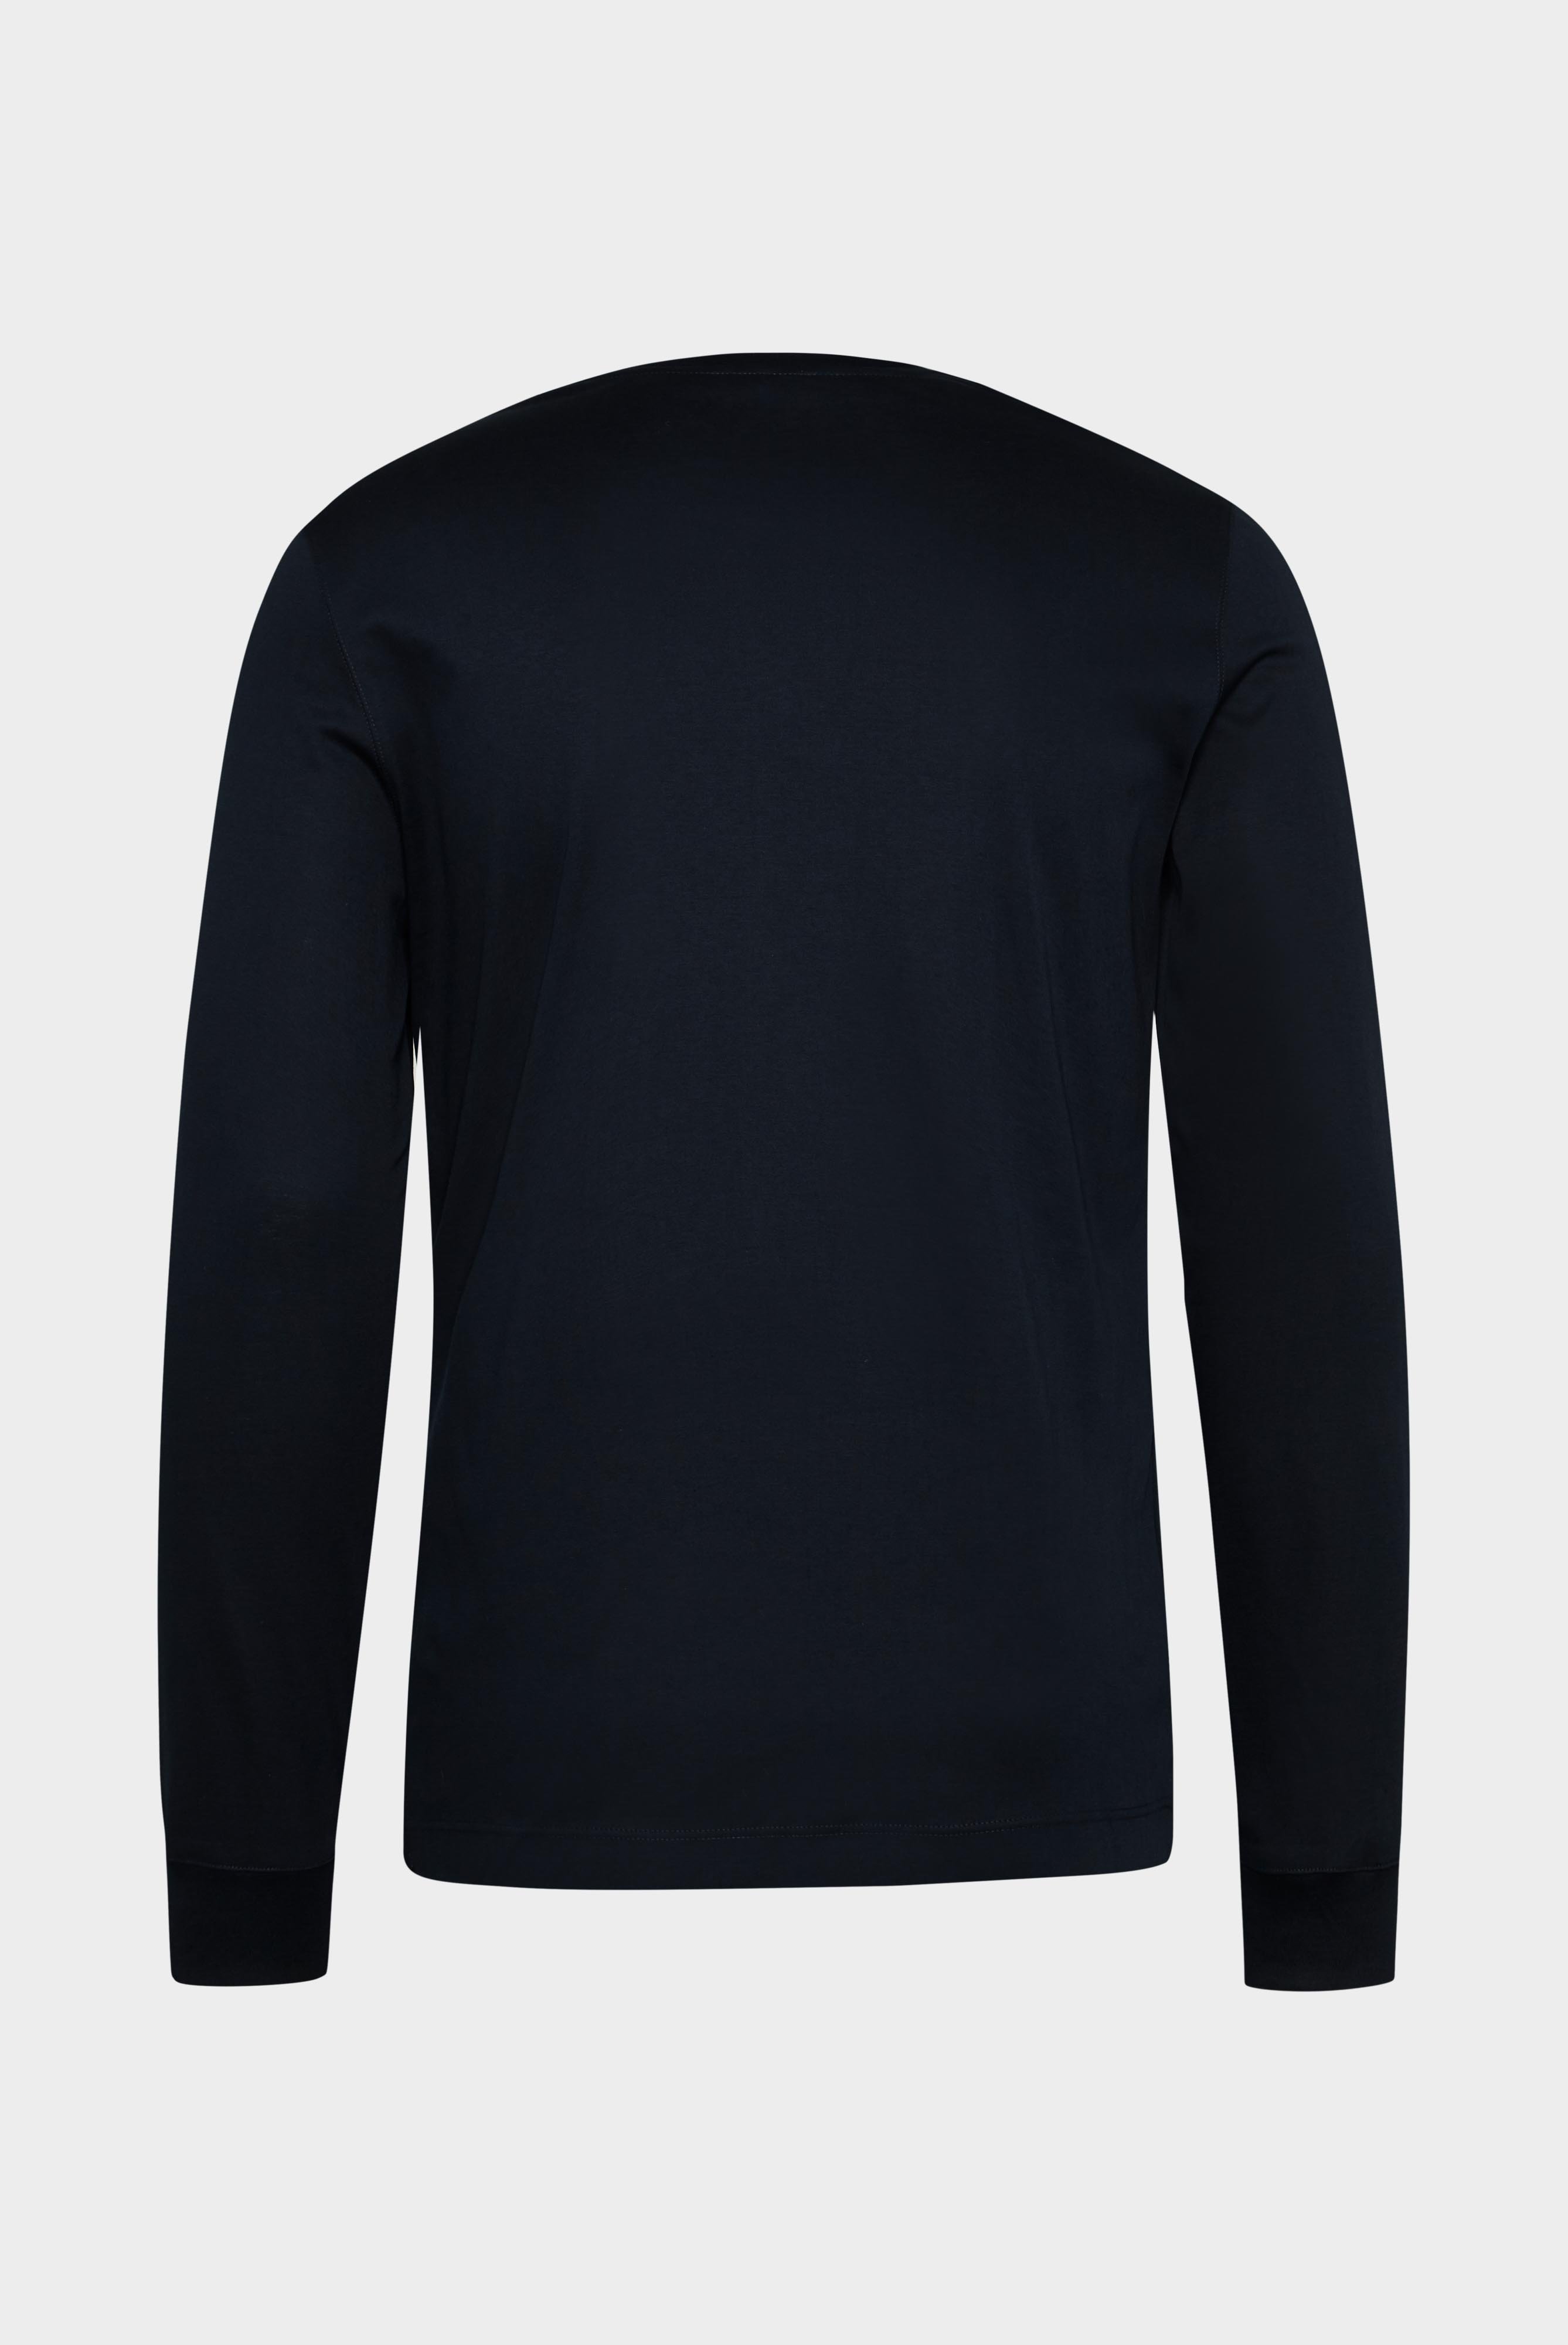 T-Shirts+Longsleeve Swiss Cotton Jersey Crew Neck T-Shirt+20.1718.UX.180031.790.S